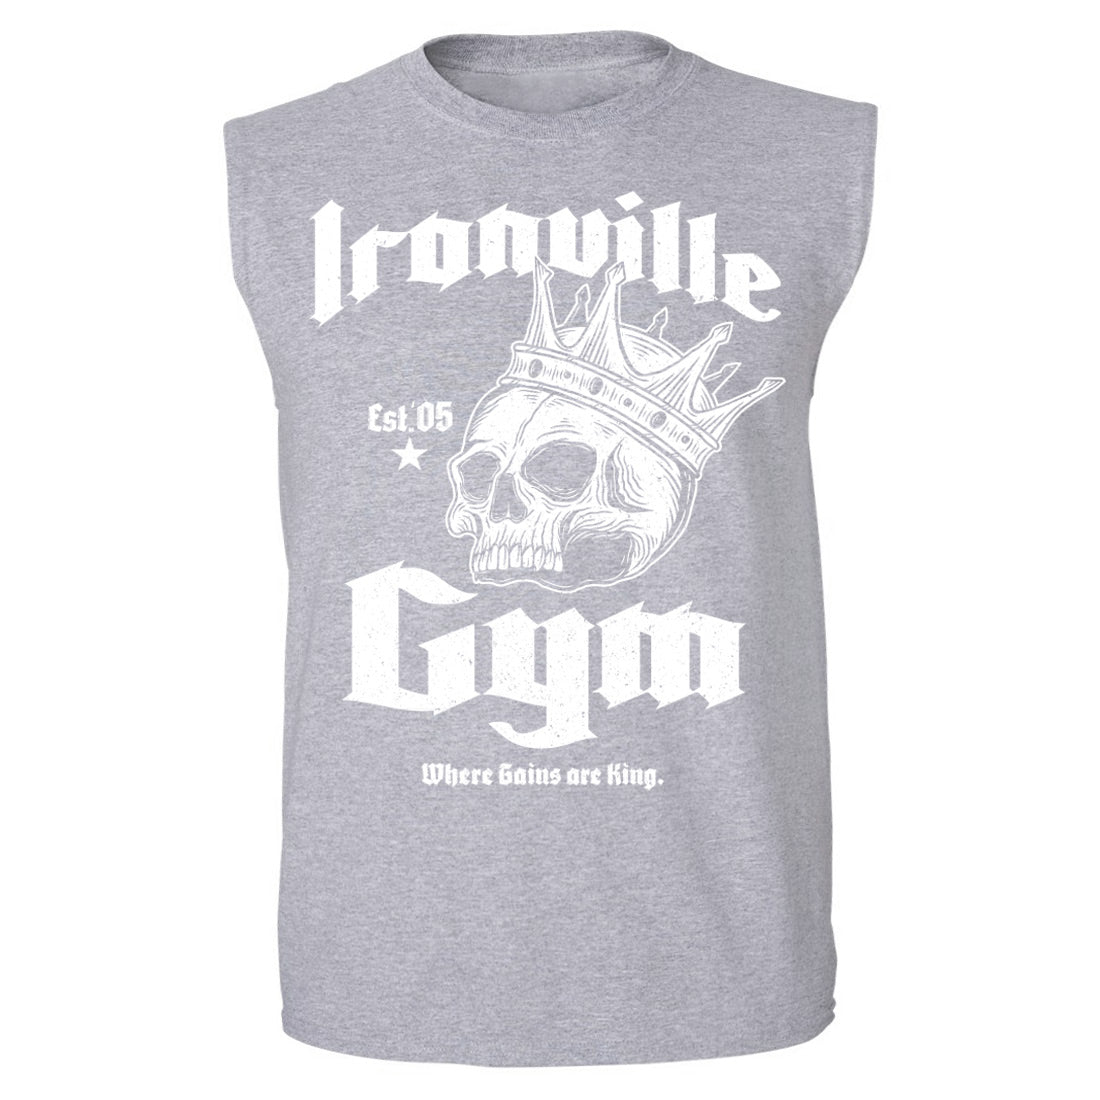 Ironville GYM KING Sleeveless Muscle T-shirt